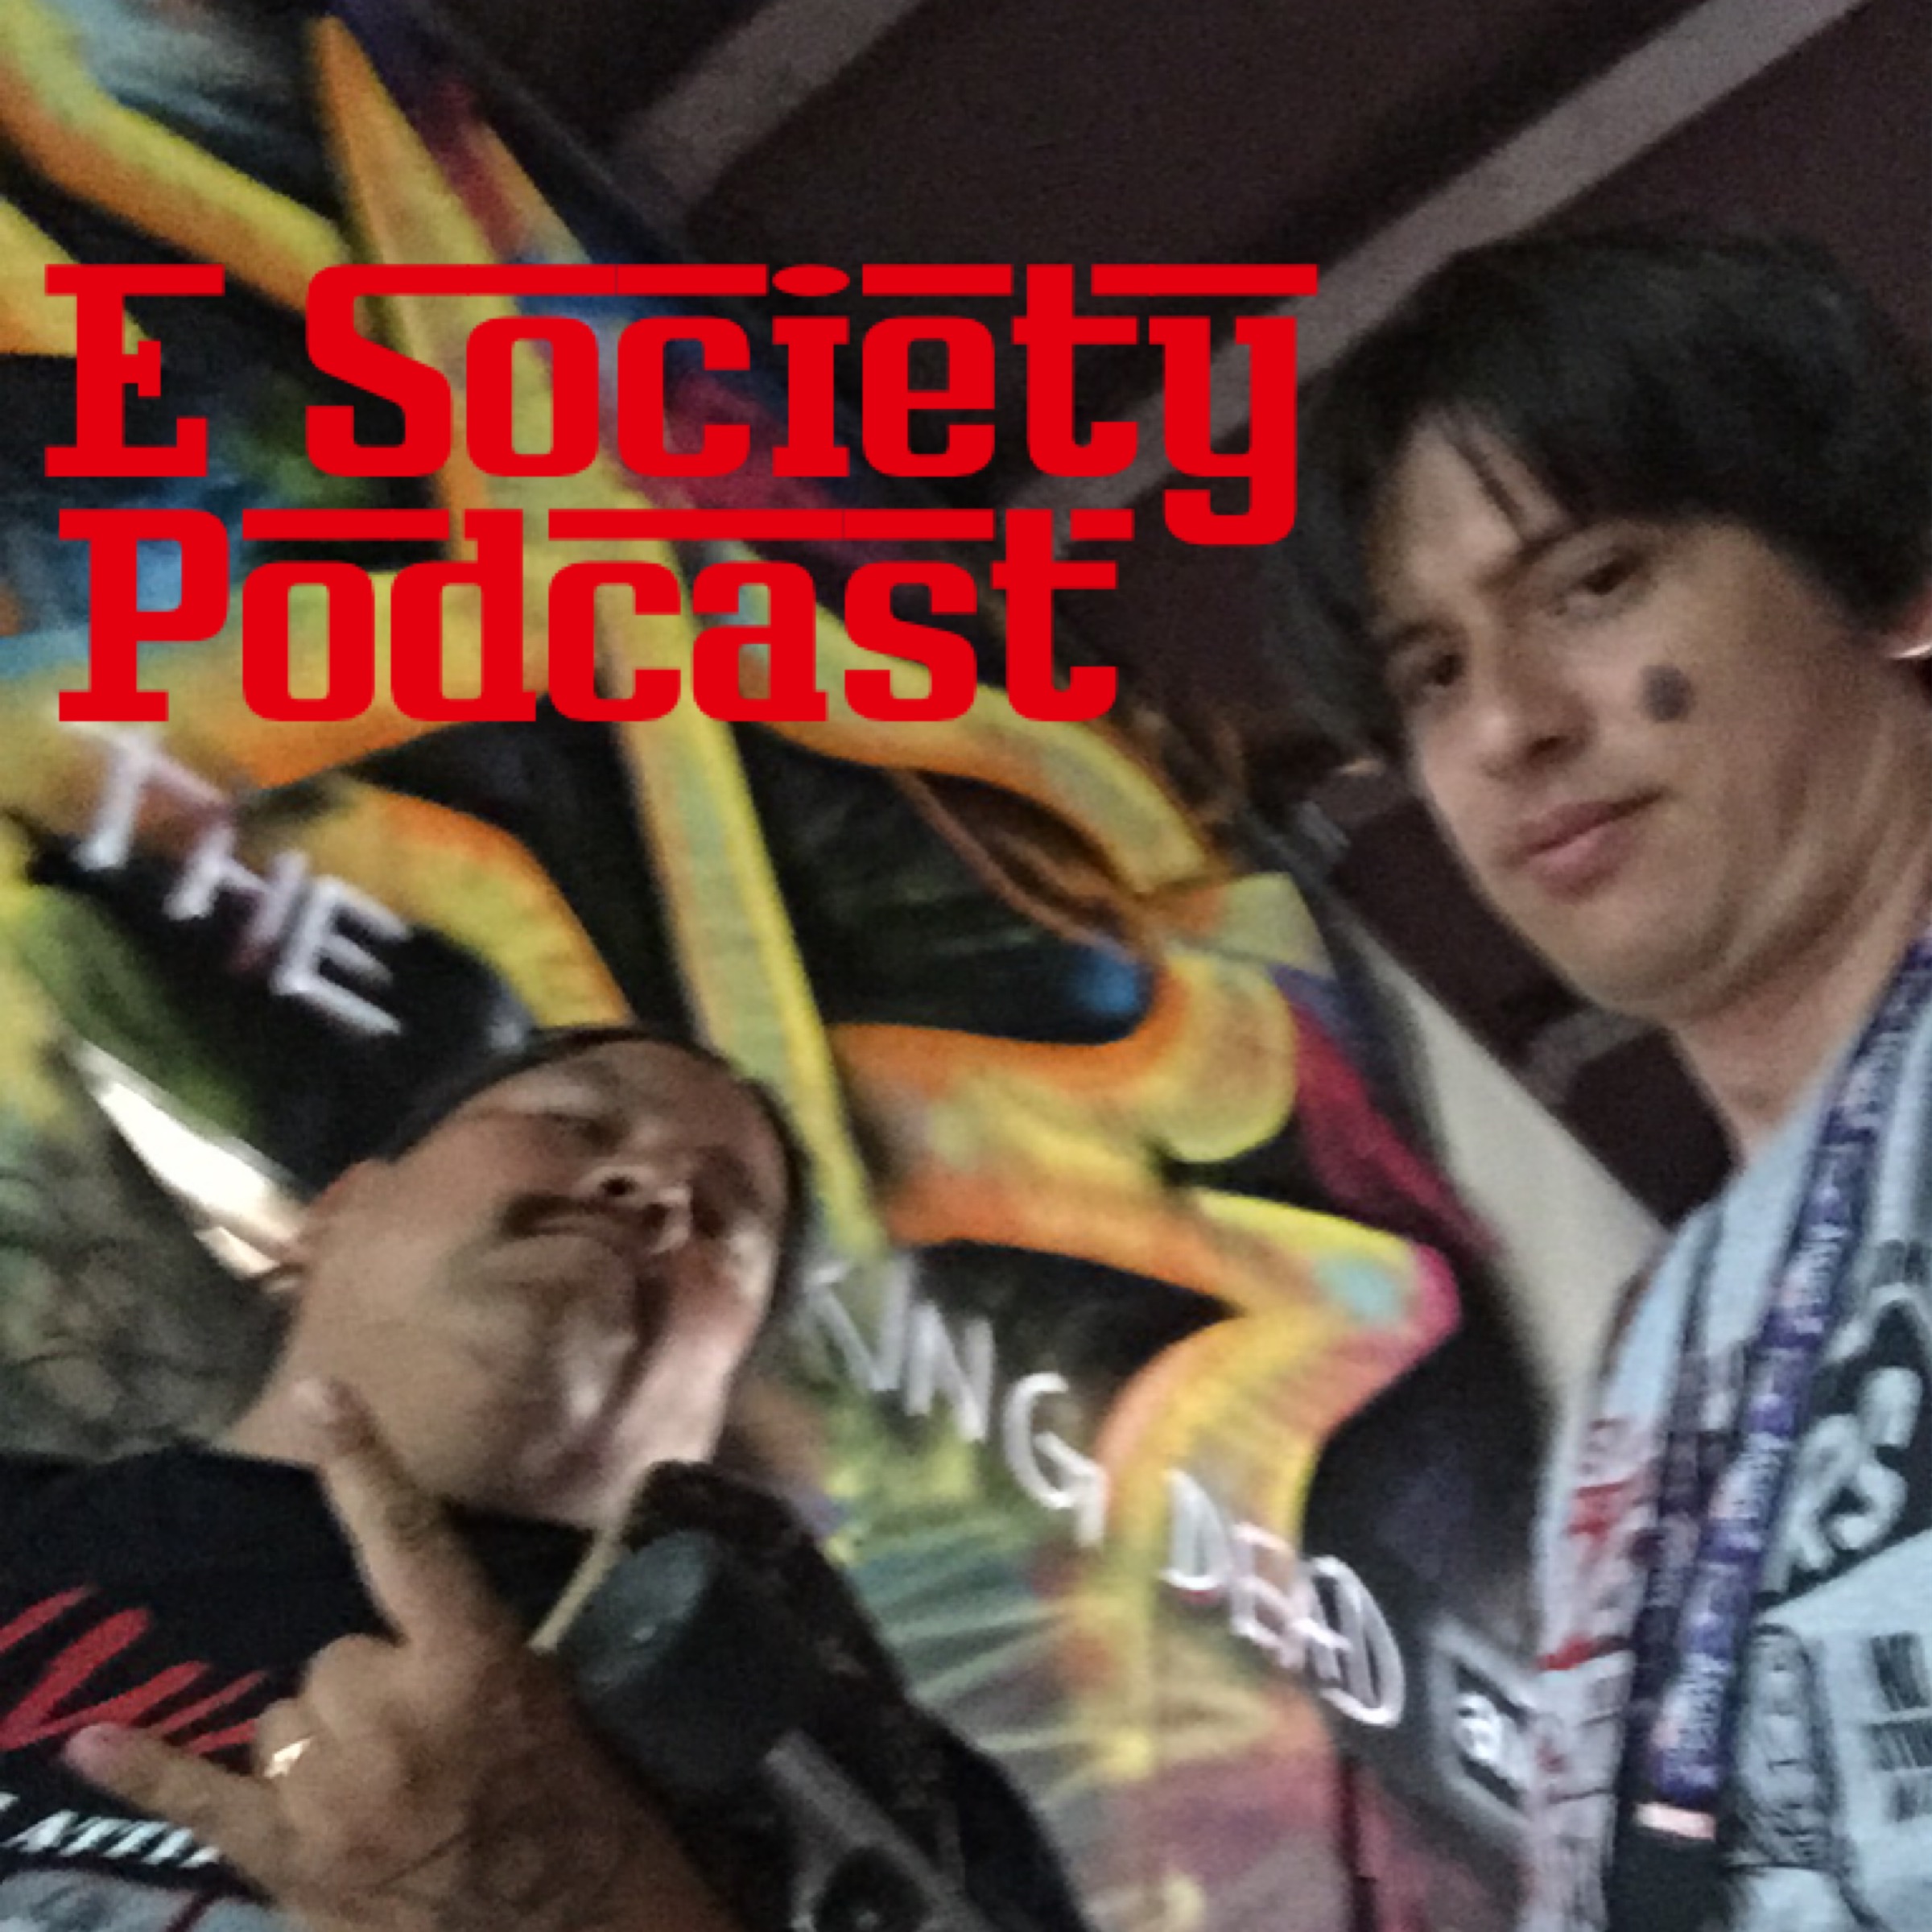 E Society Podcast - Ep. 82: We back suckas!